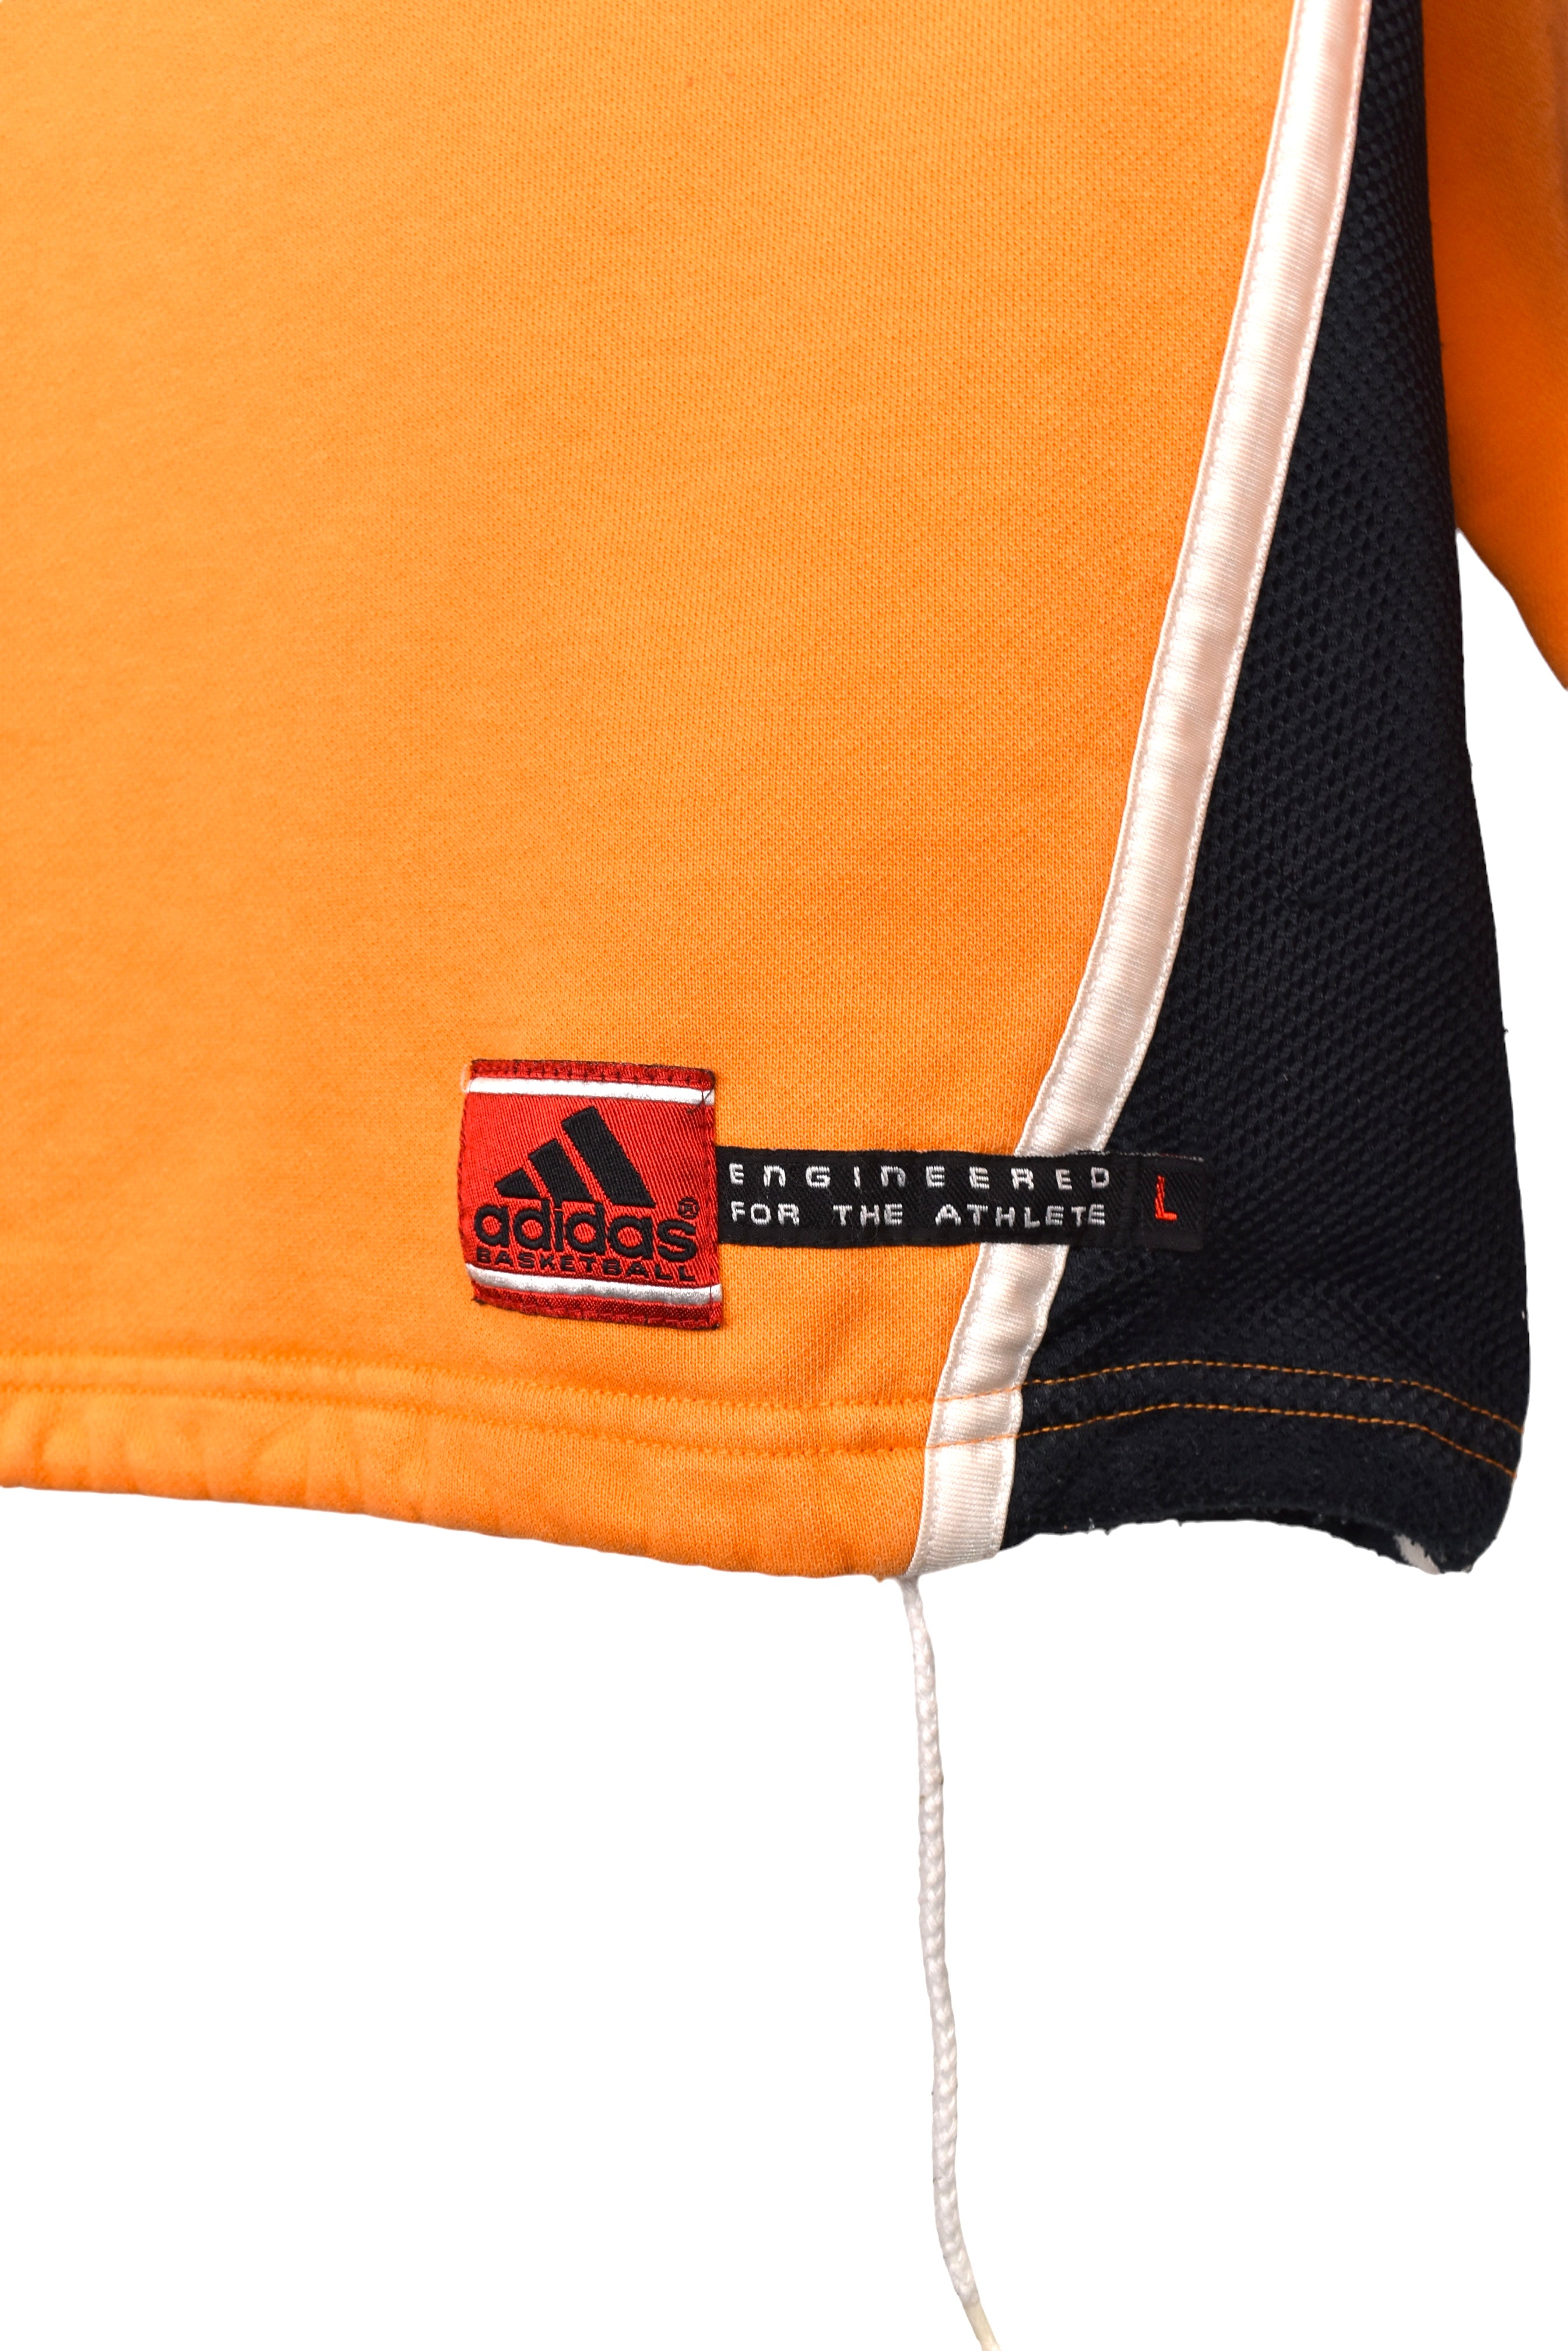 Vintage Adidas basketball hoodie, yellow embroidered sweatshirt - XL